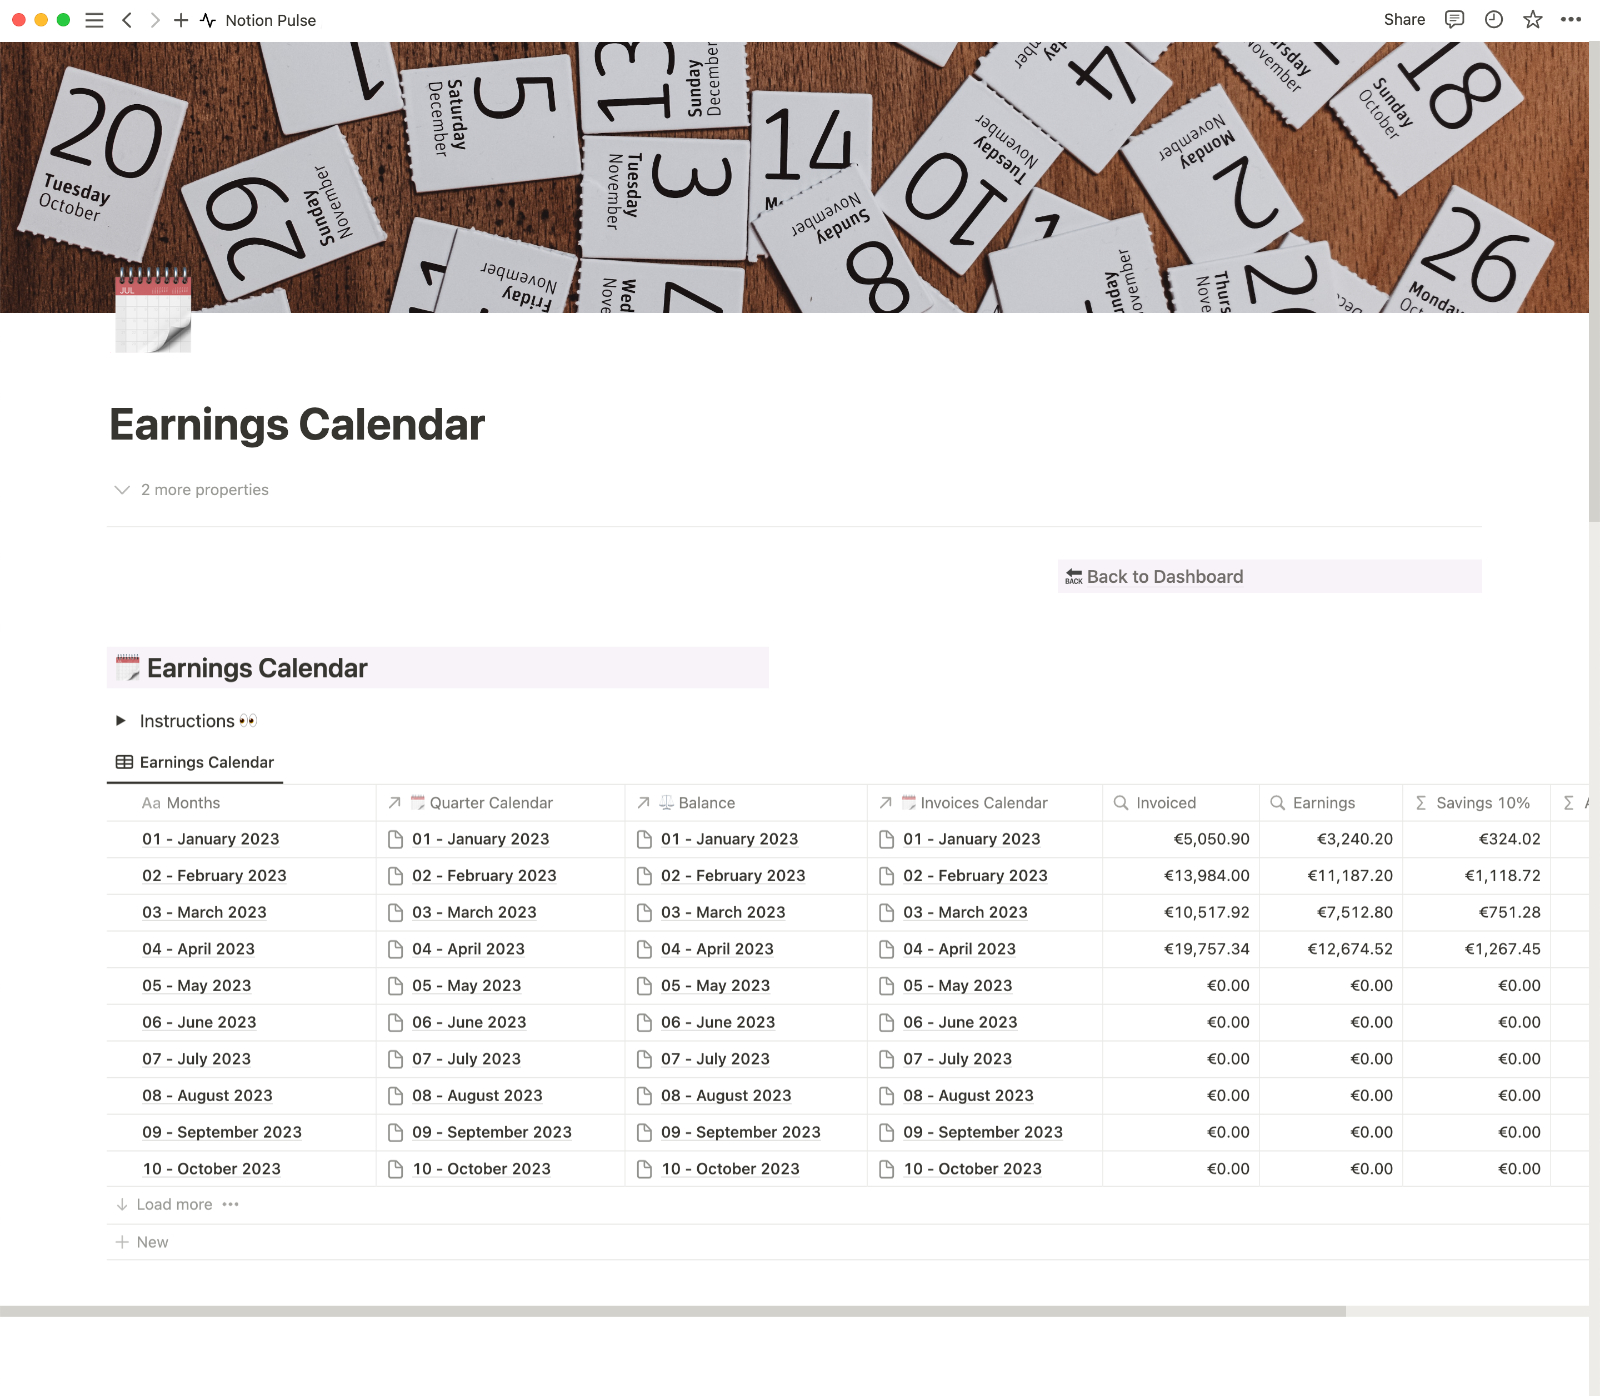 Notion Pulse Earnings Calendar